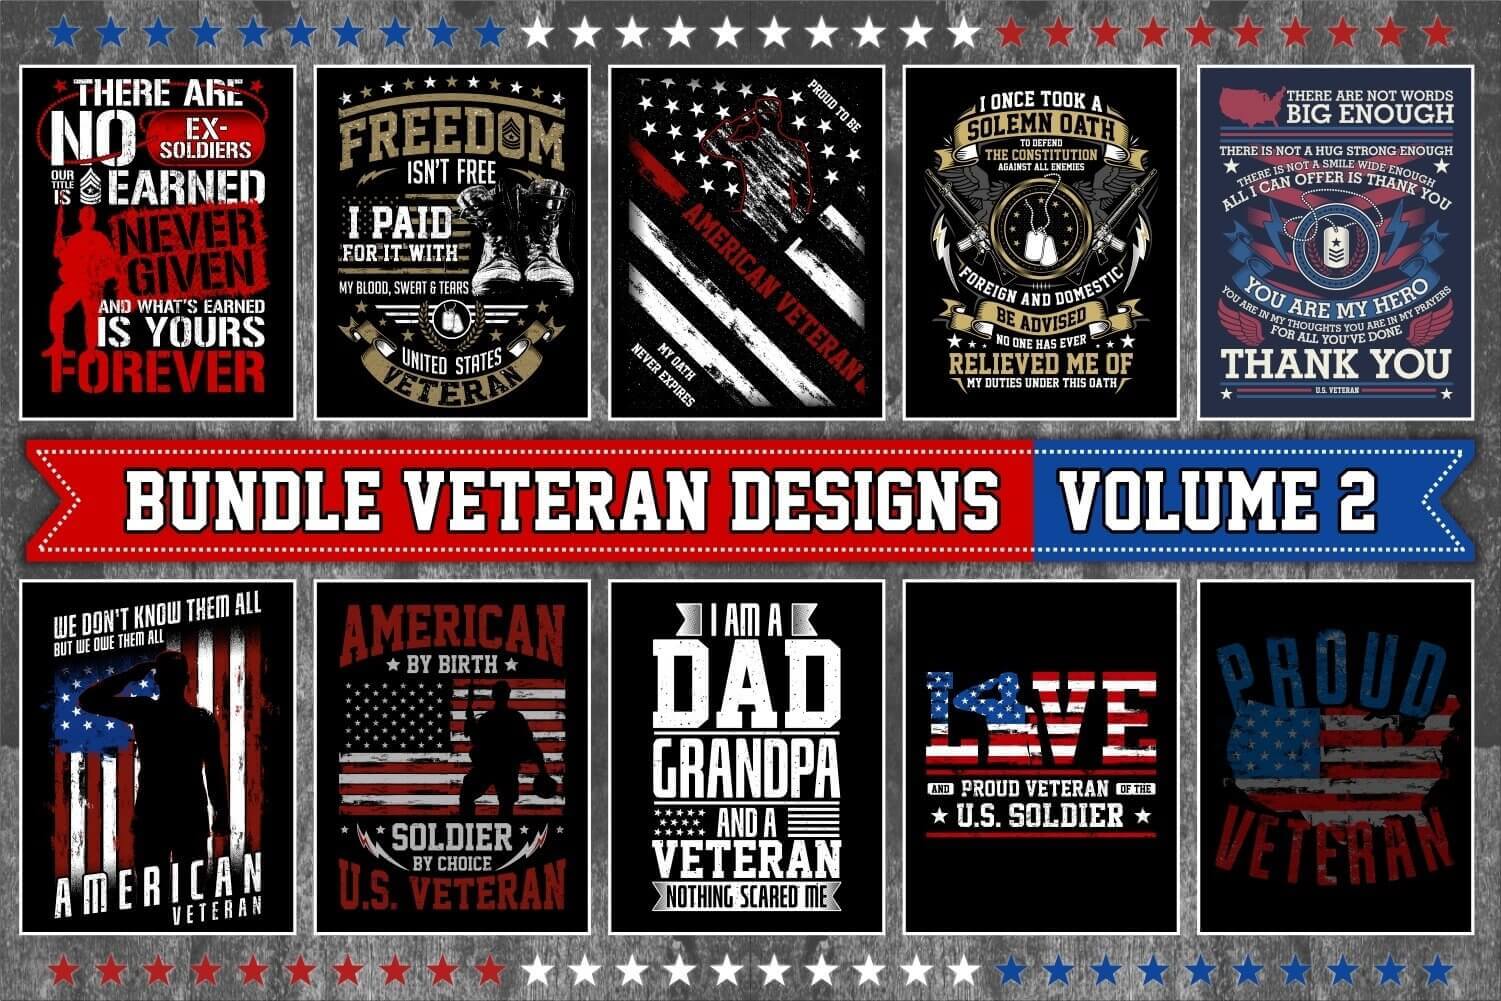 10 examples of bundle veteran designs volume 2.